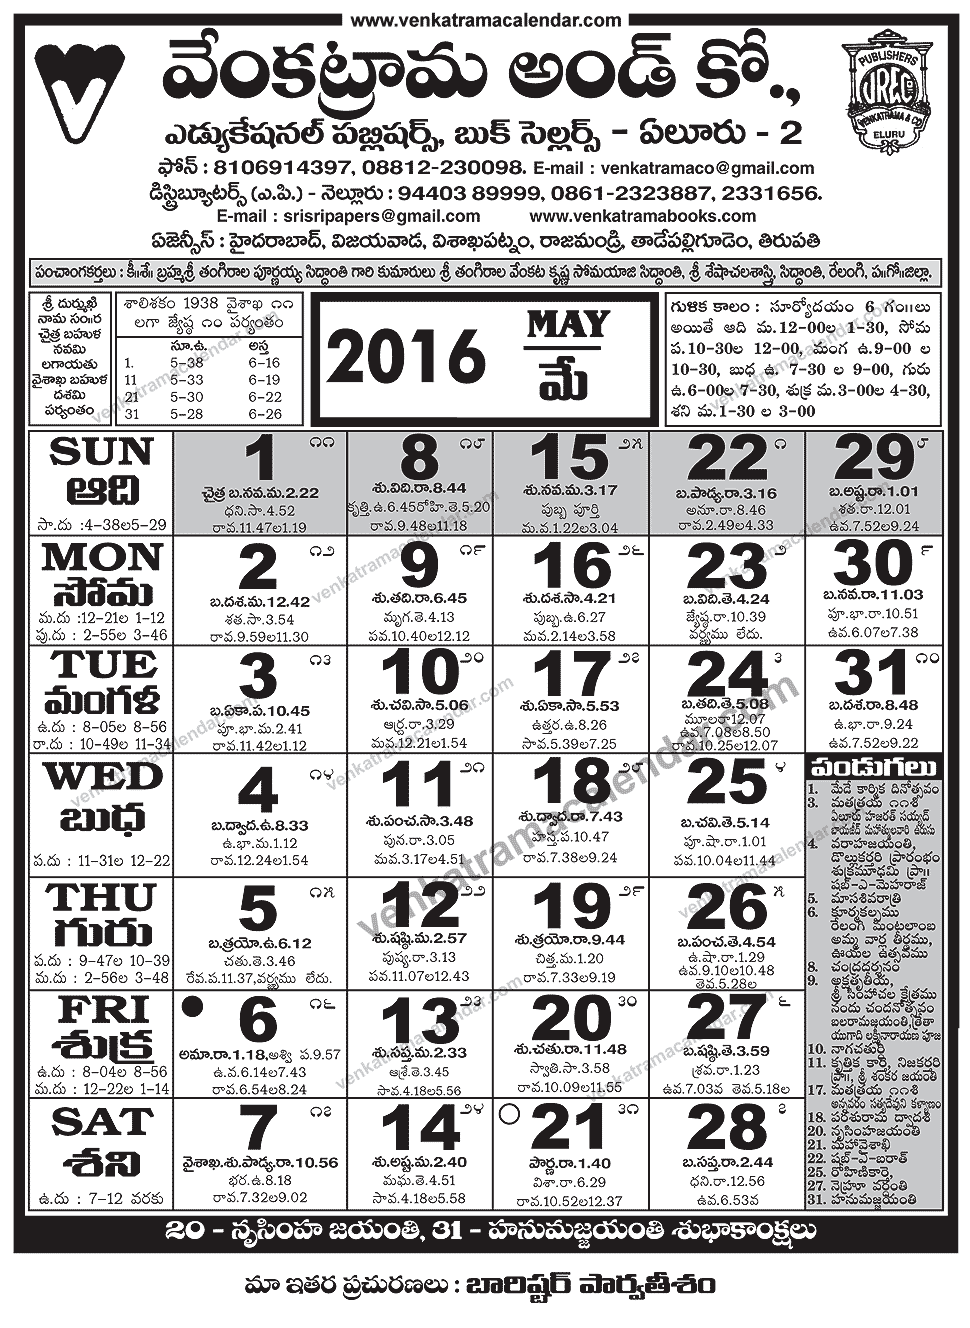 may-2016-venkatrama-co-telugu-calendar-venkatrama-telugu-calendar